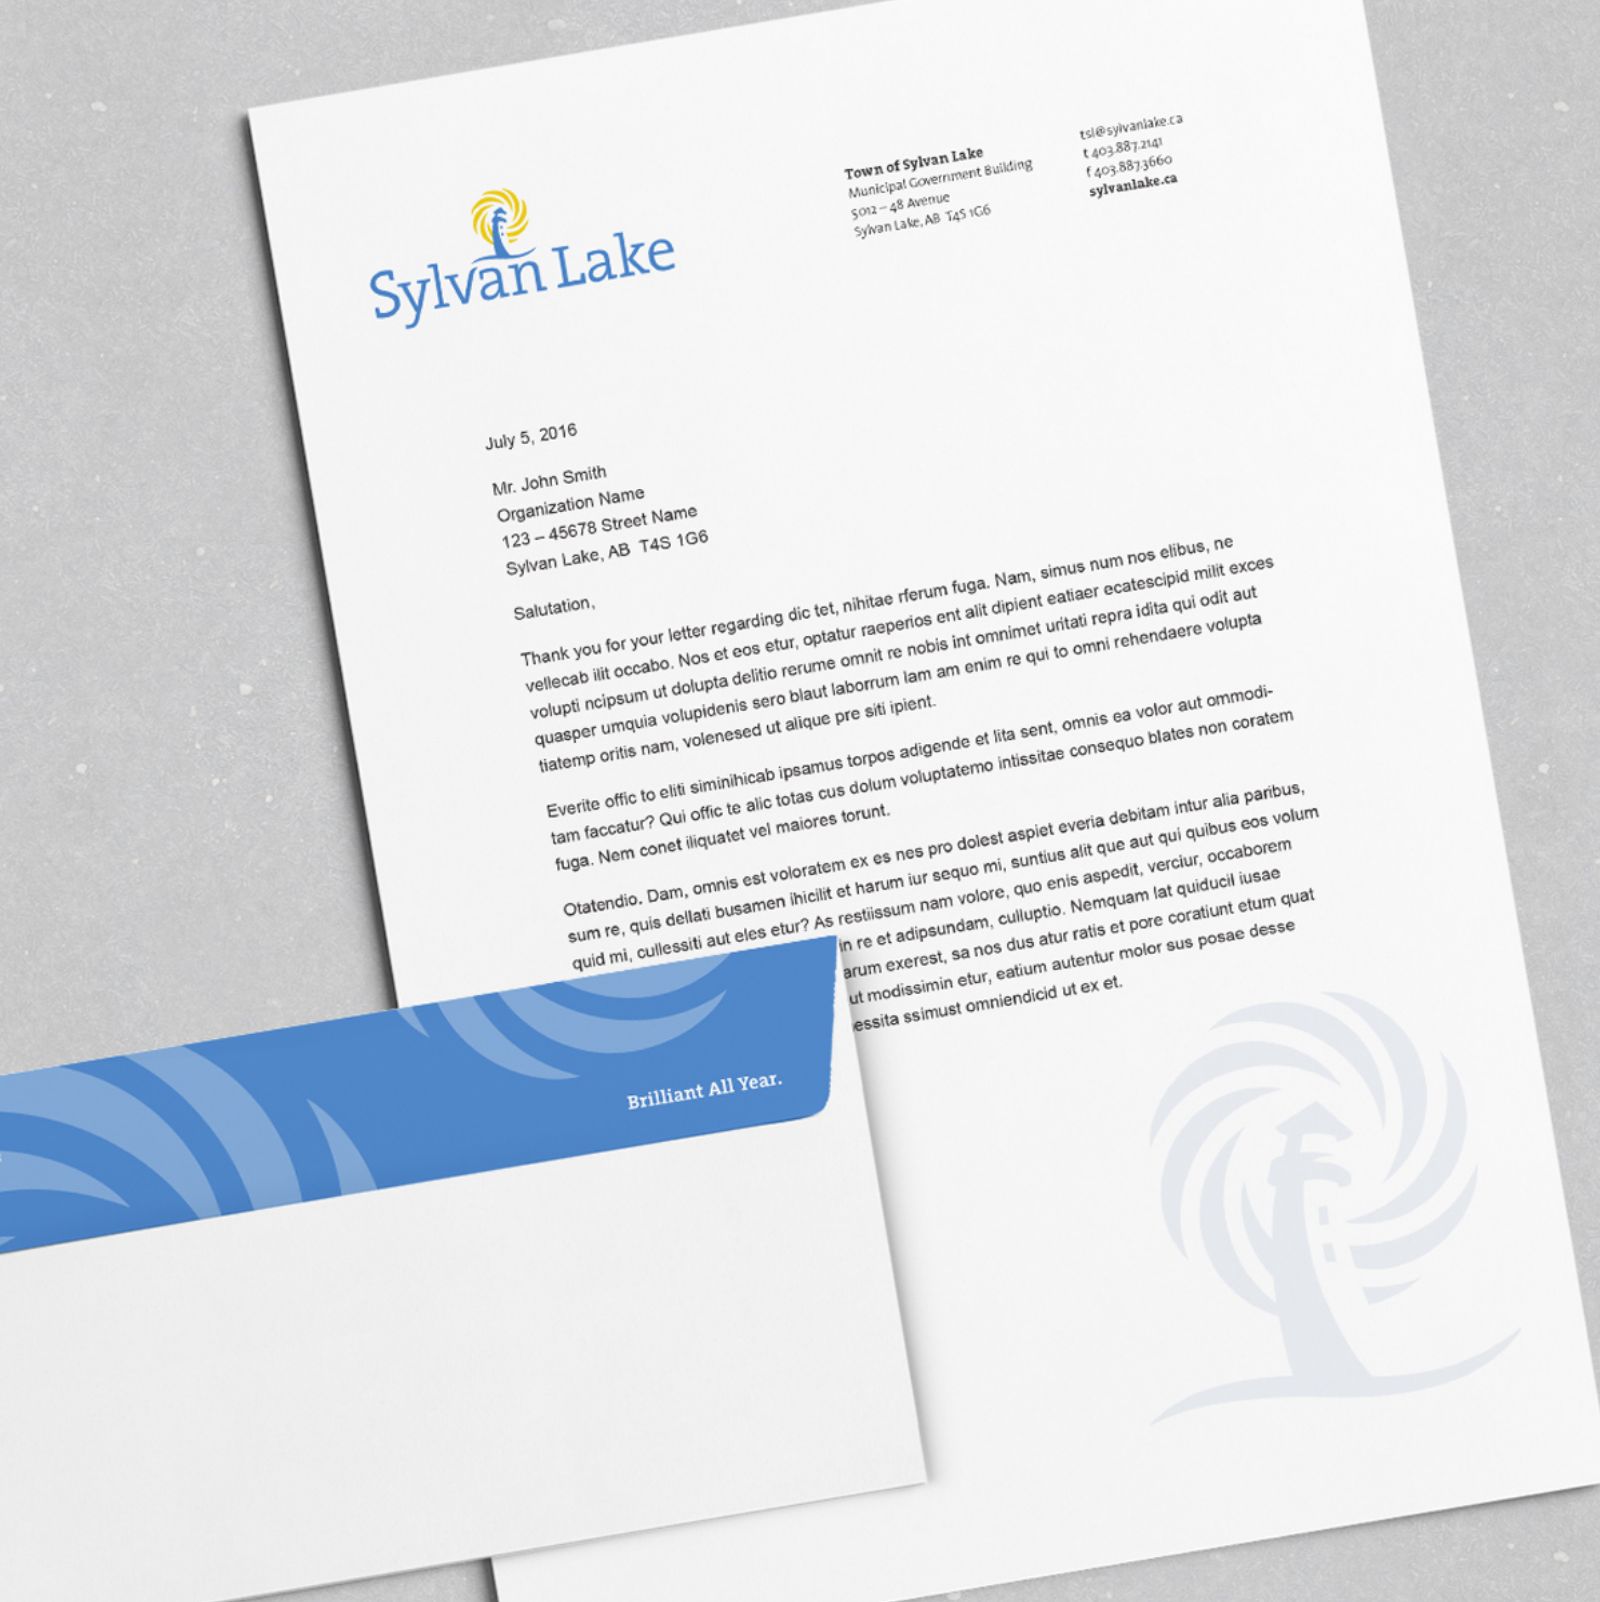 Town of Sylvan Lake Logo letterhead and envelope